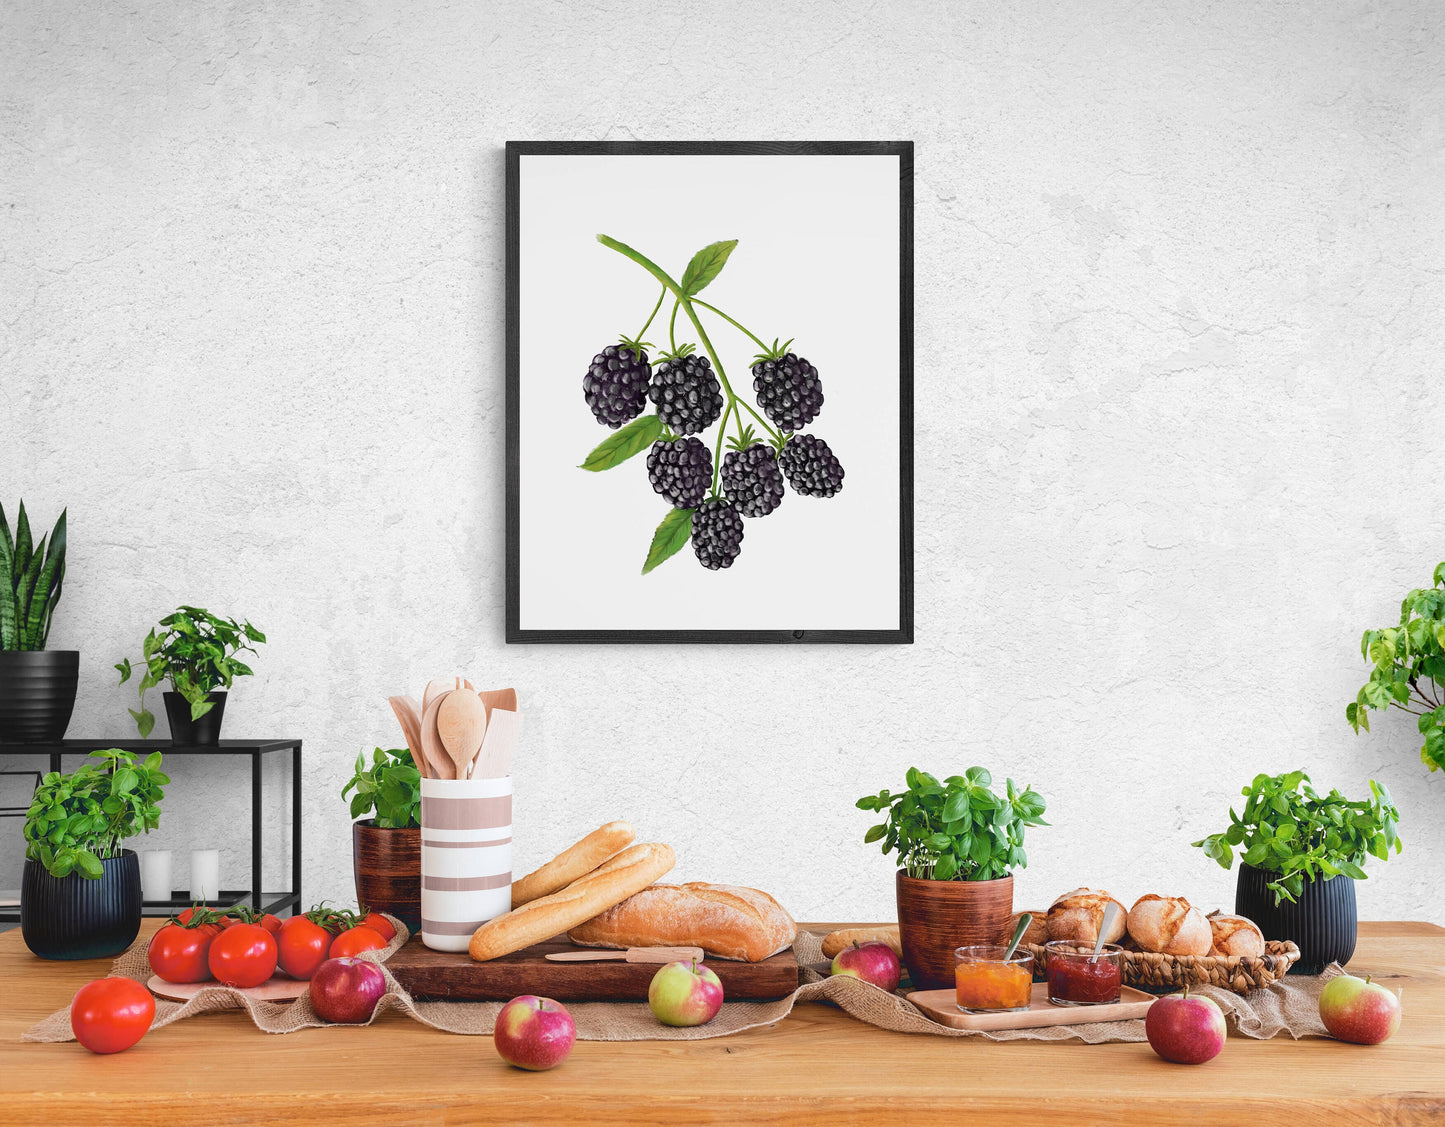 Blackberry Art Print, Blackberry Wall Art, Kitchen Wall Hanging, Dining Room Decor, Berry Painting, Fruit Illustration, Farmhouse Wall Decor